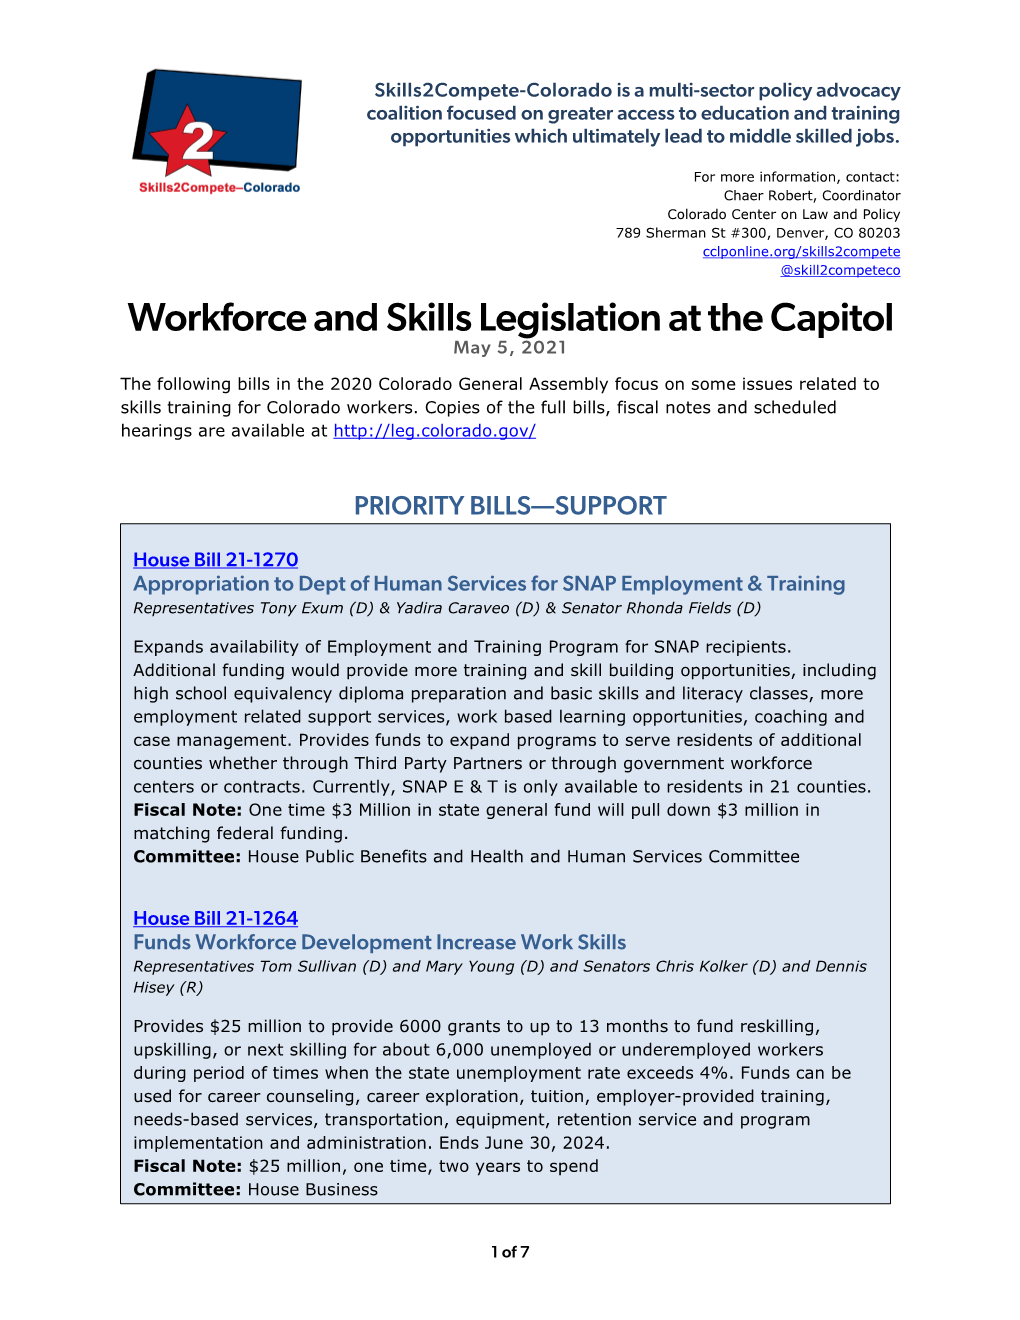 Workforce and Skills Legislation at the Capitol May 5, 2021